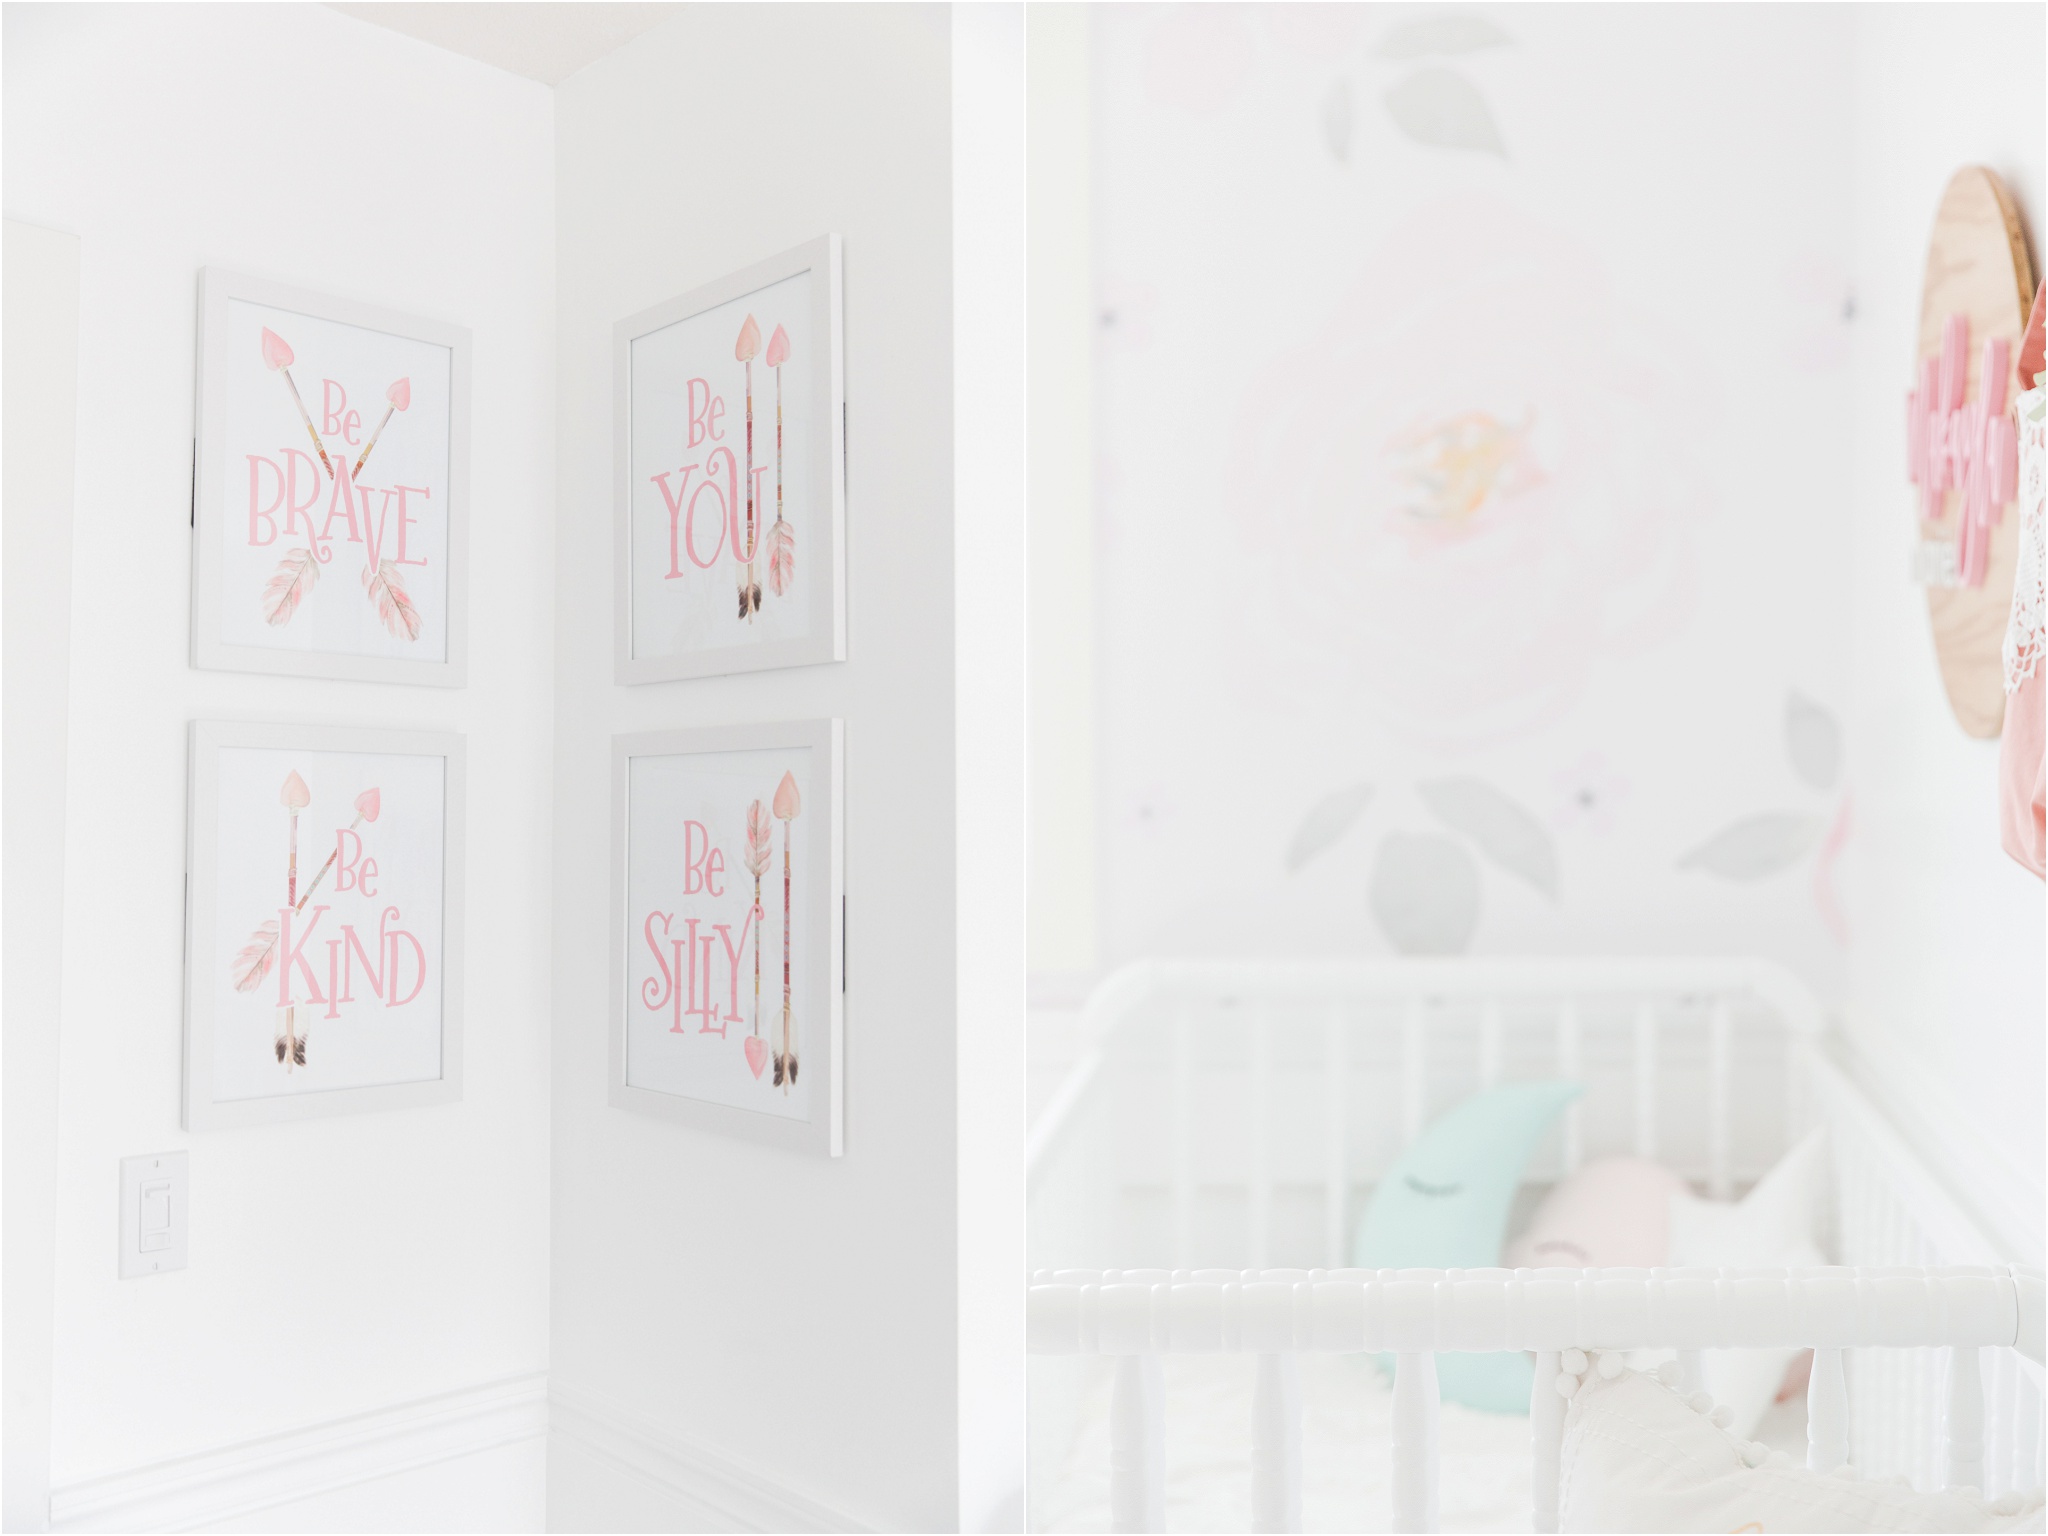 white and pink nursery tour, twin girl nursery, nc photography, edmonton photographer, mylittlewhirlwind